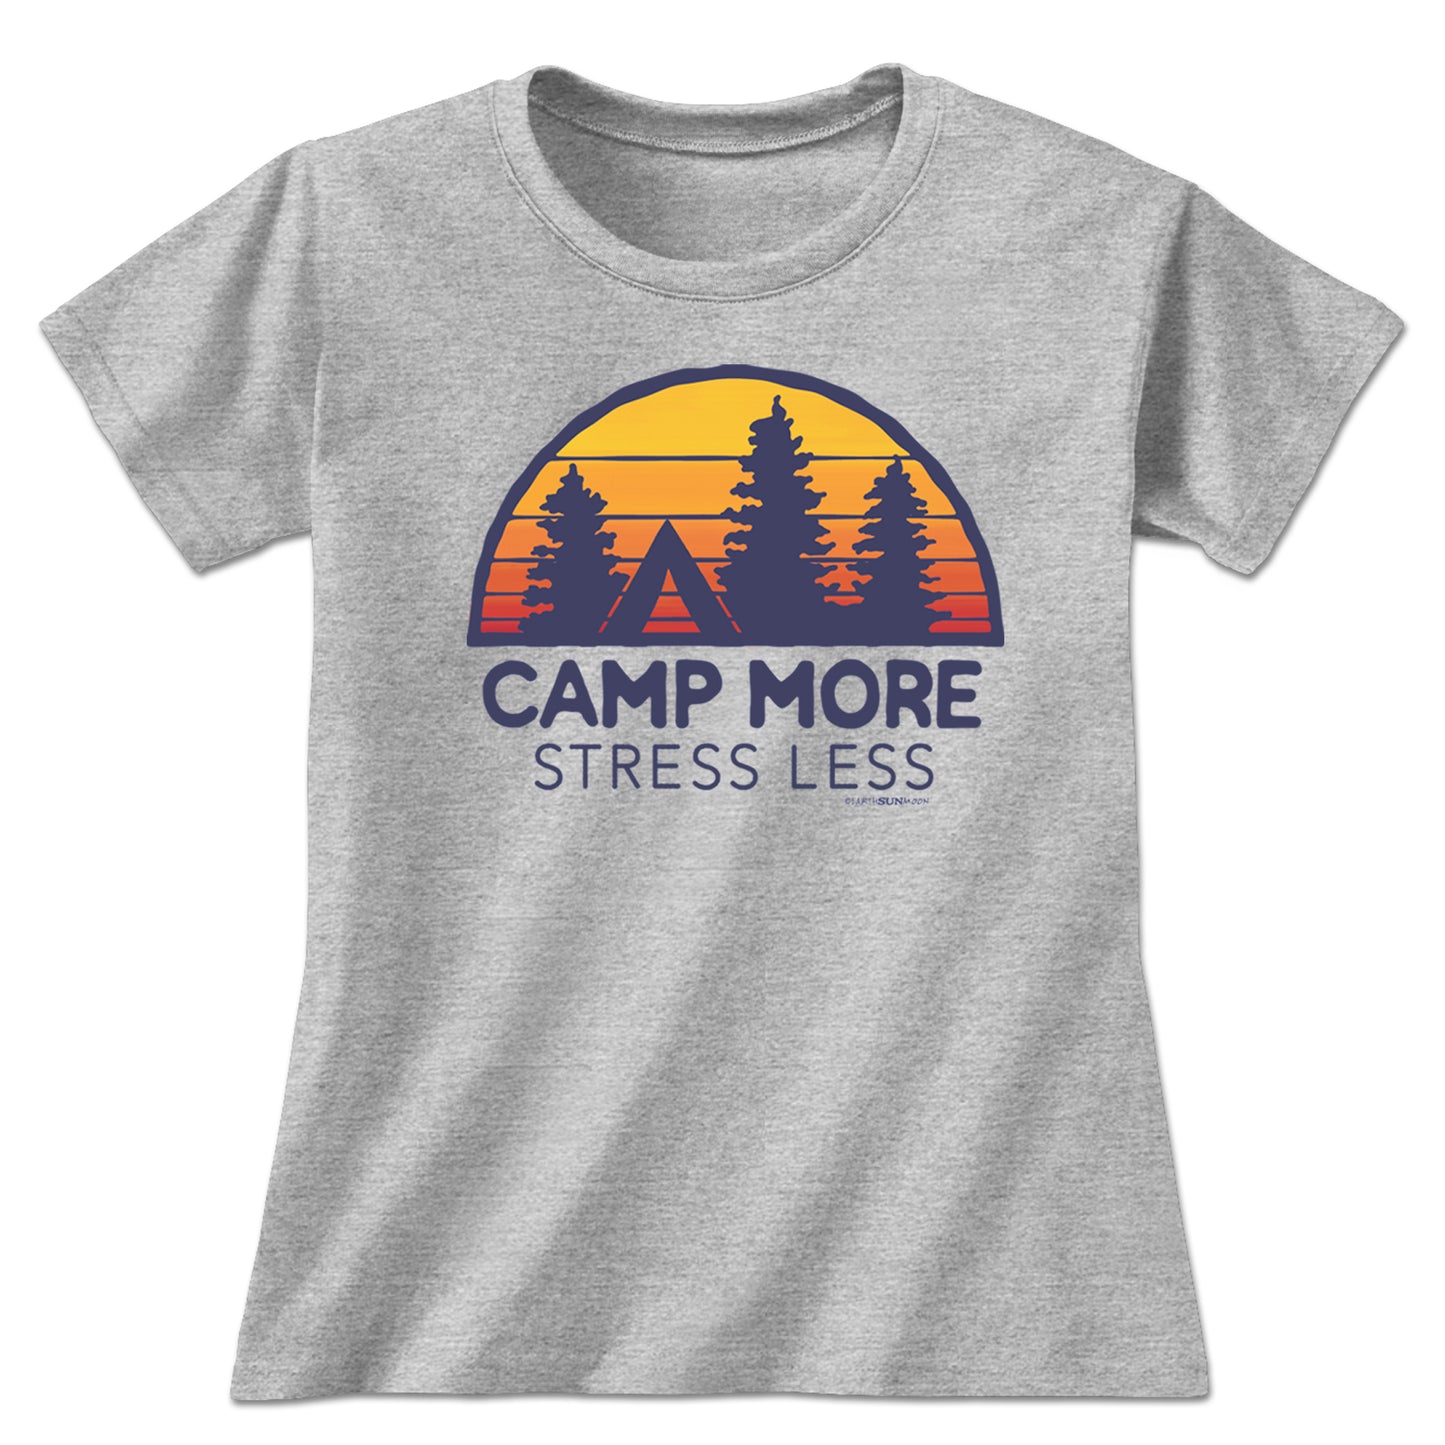 Camp More Stress Less Ladies Tee